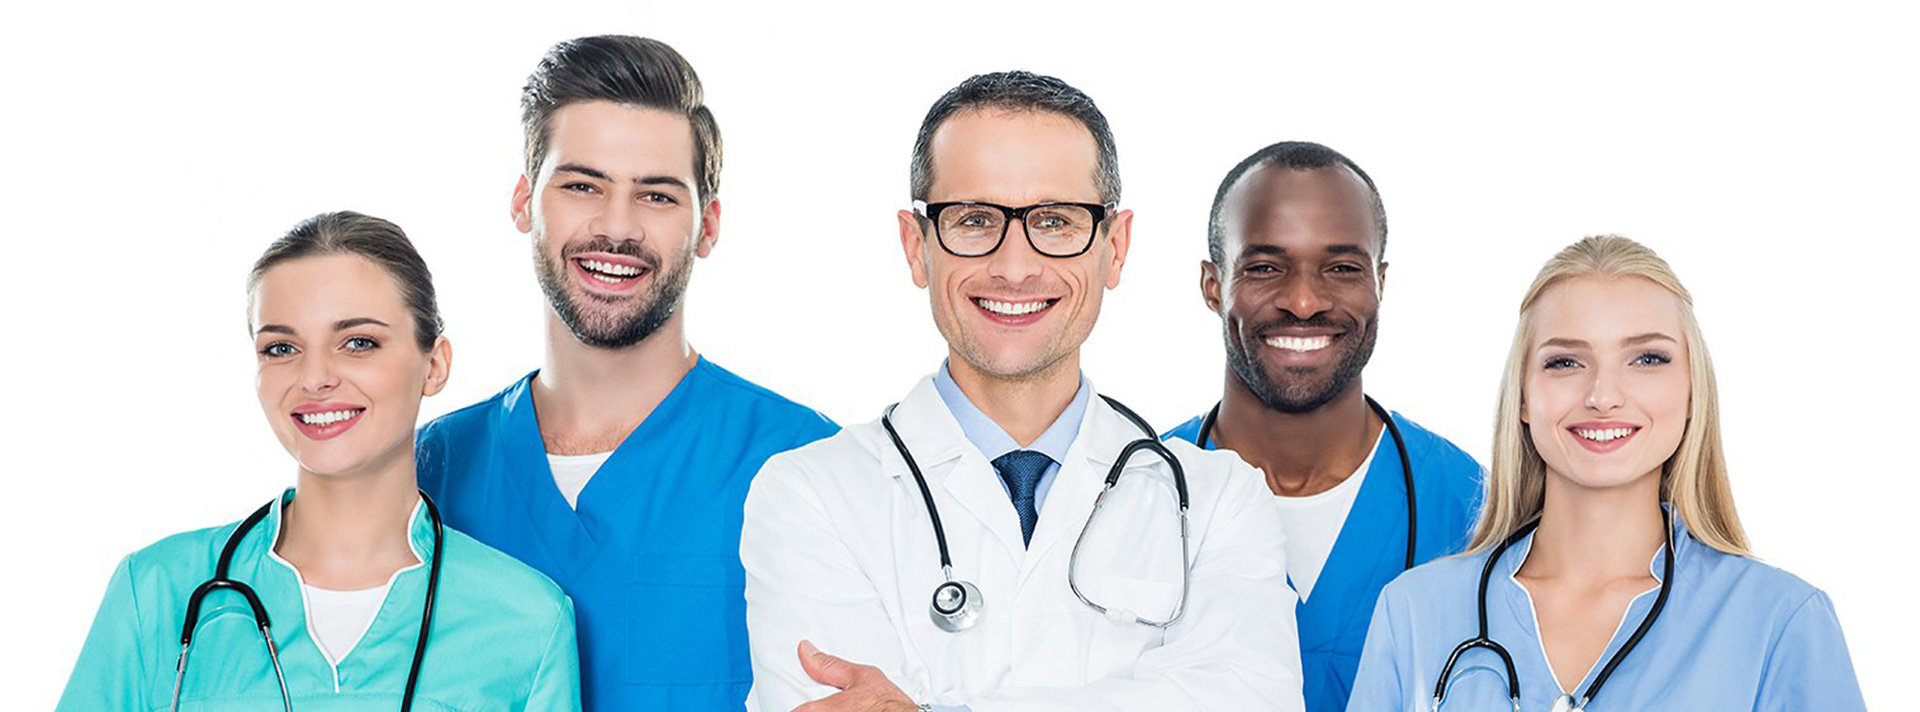 Medical Marijuana Doctors in Boca Raton, Florida 33481